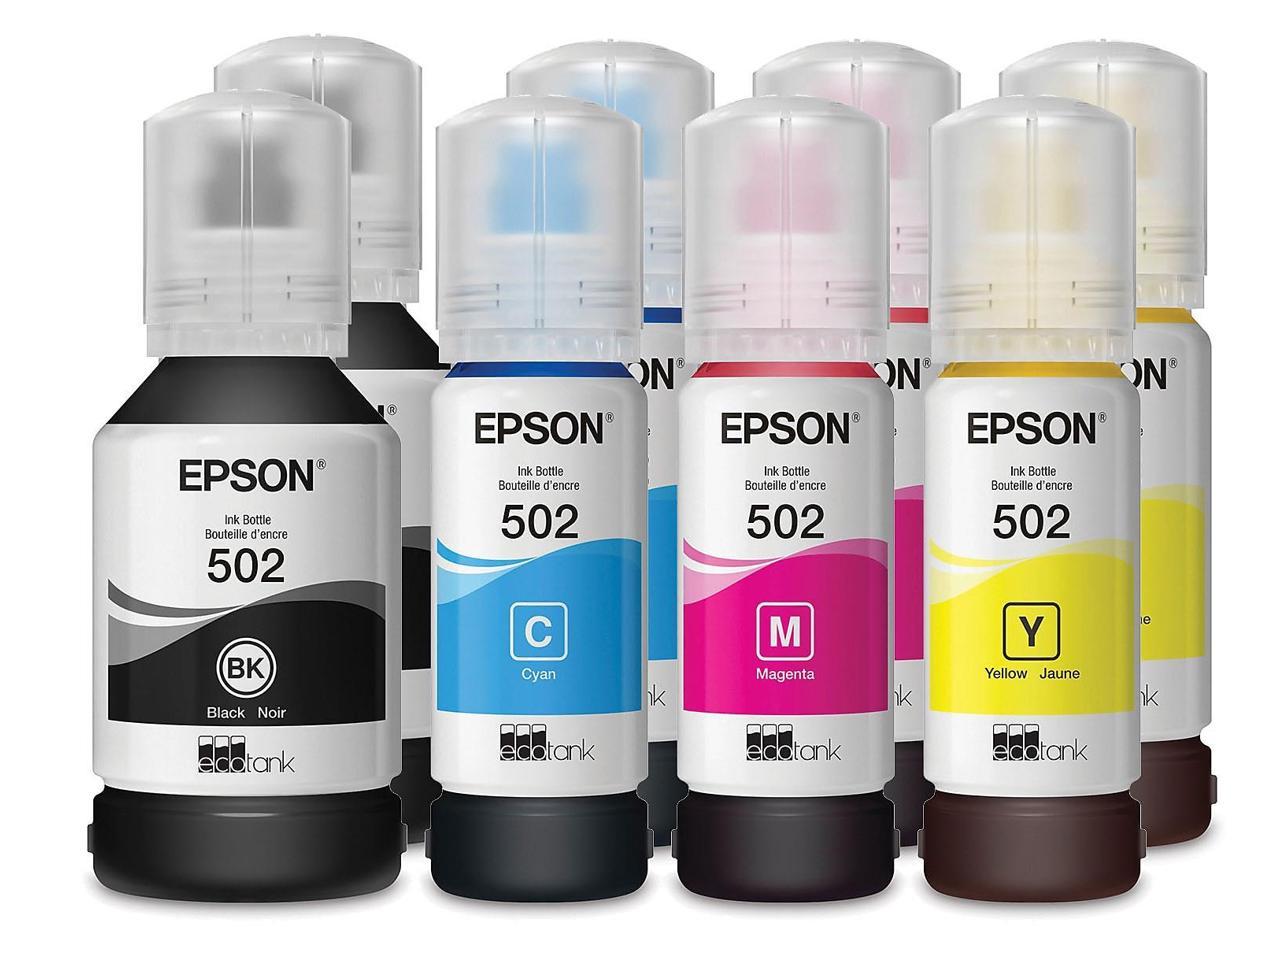 Epson C11cg19201 Epson Workforce Et 4750 Inkjet Multifunction Printer Color Plain Paper